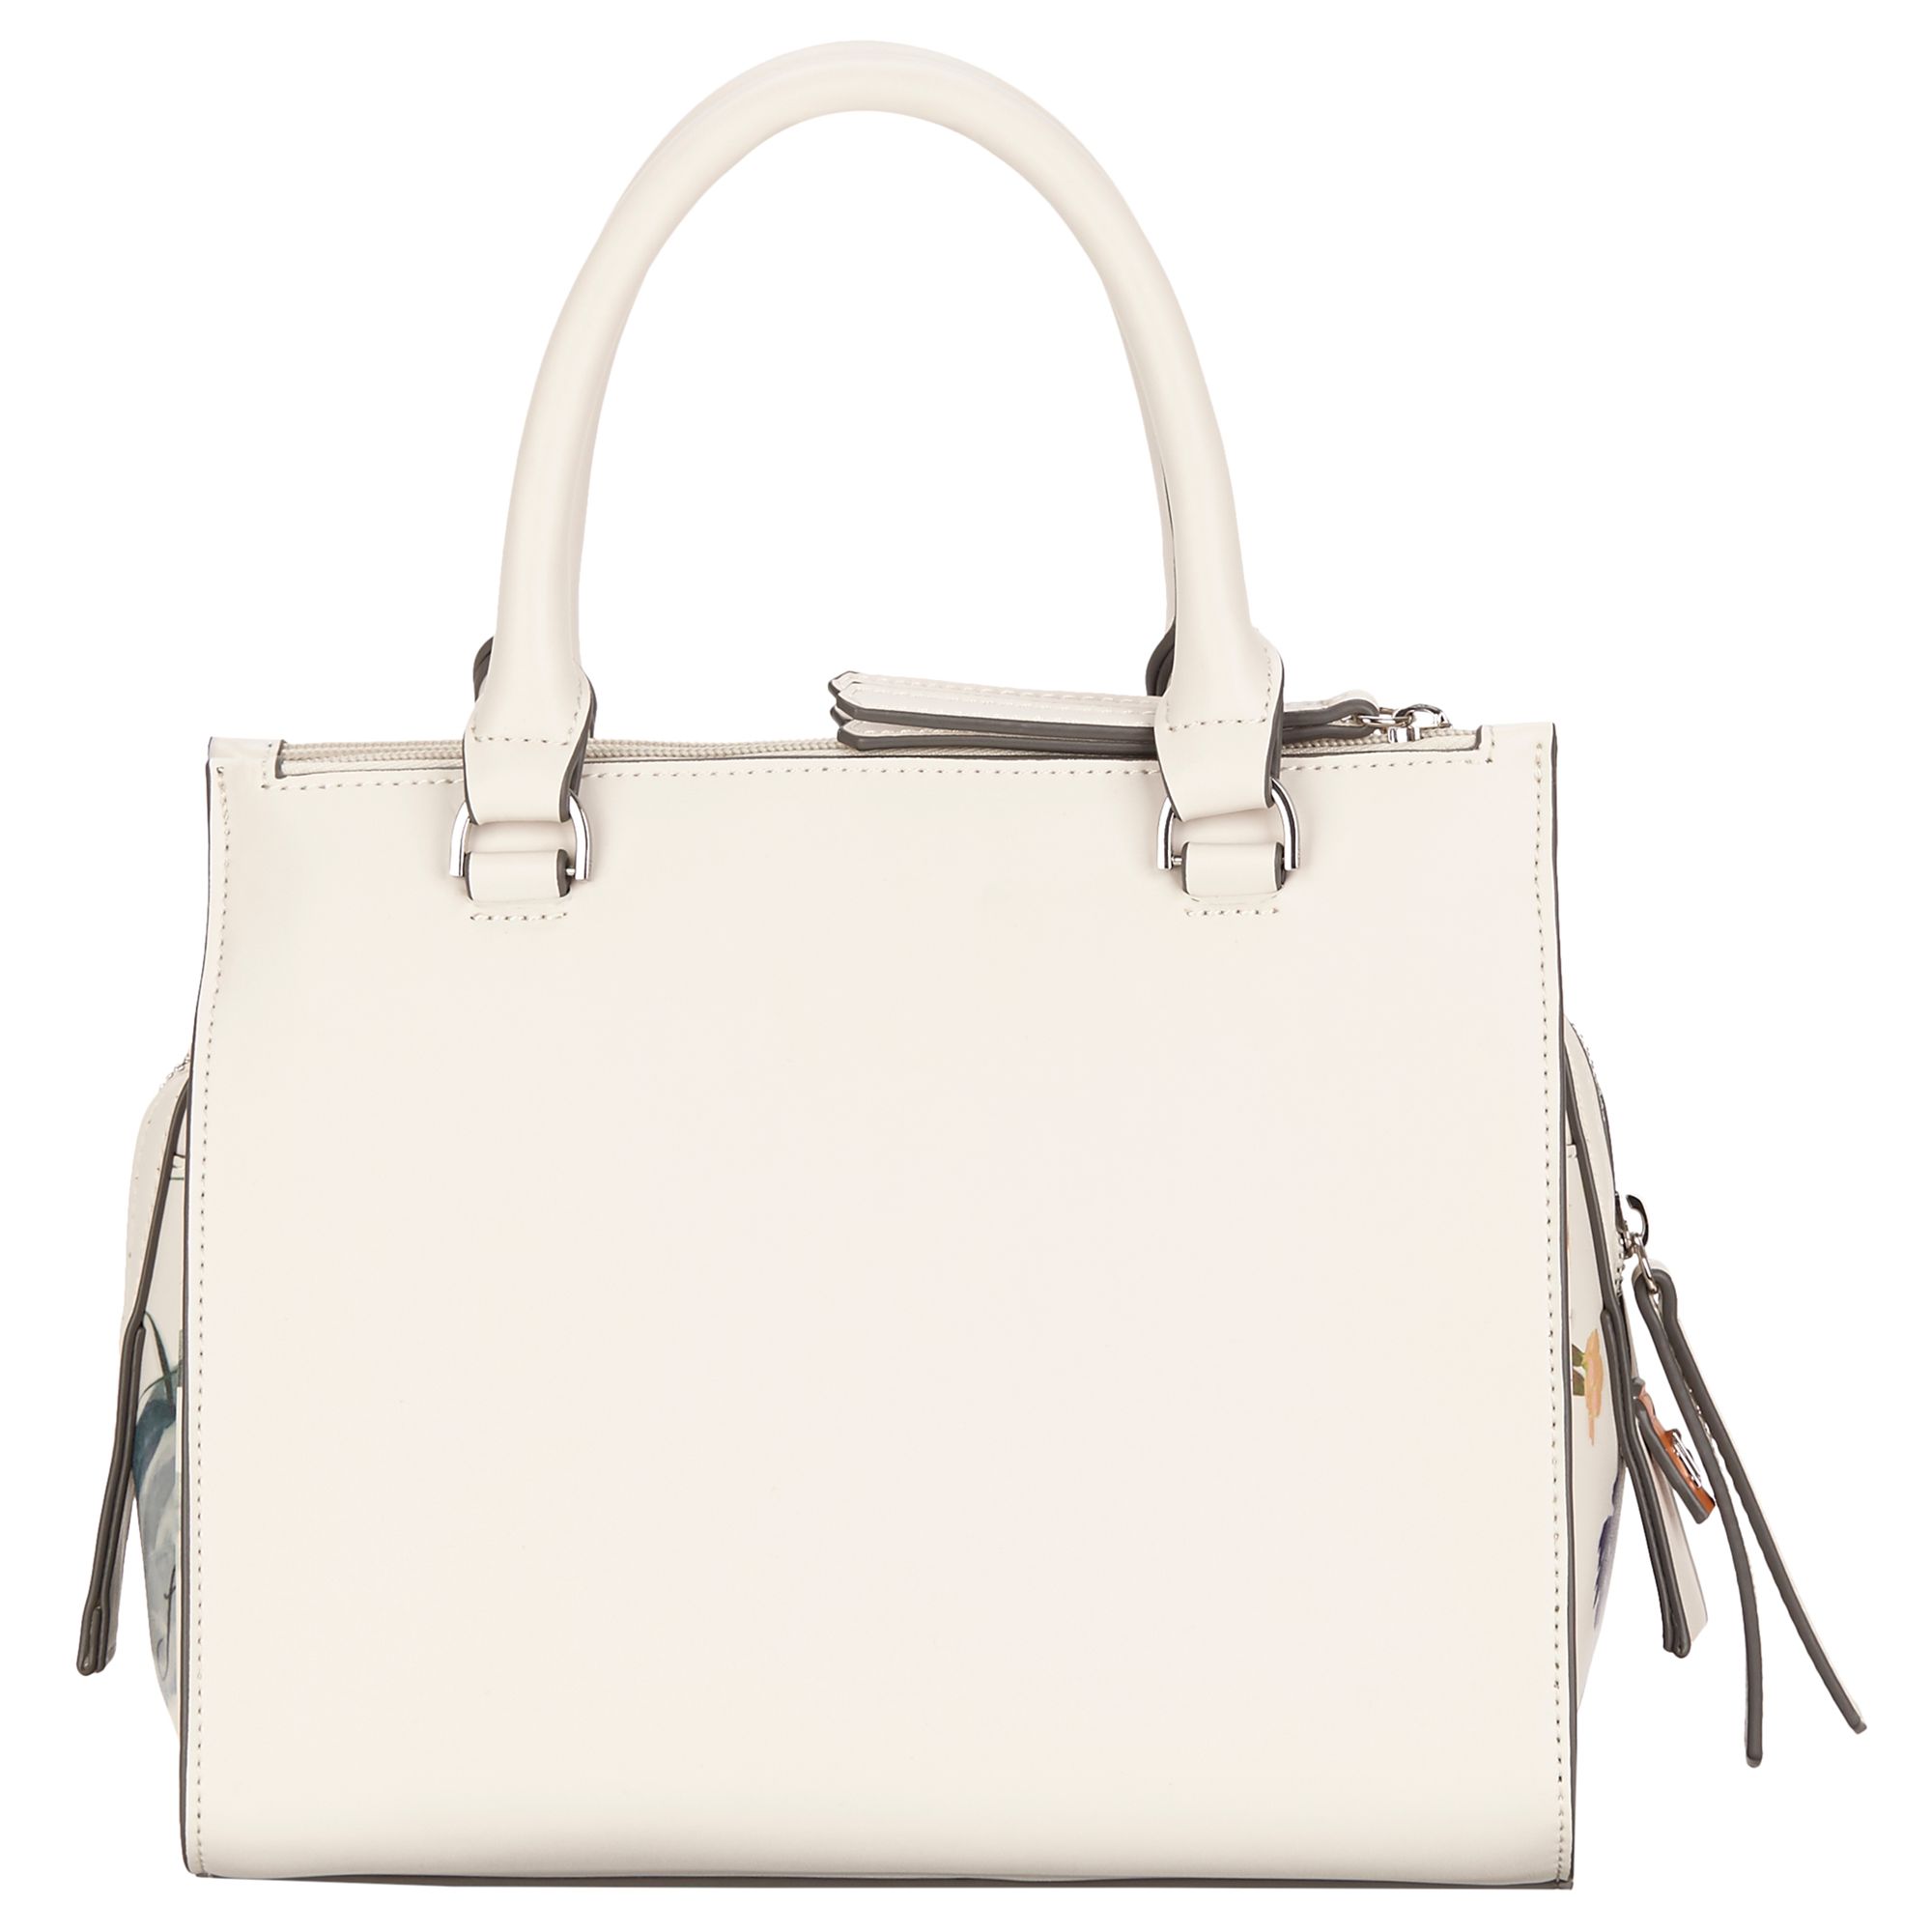 Buy Fiorelli Mia Small Grab Bag | John Lewis